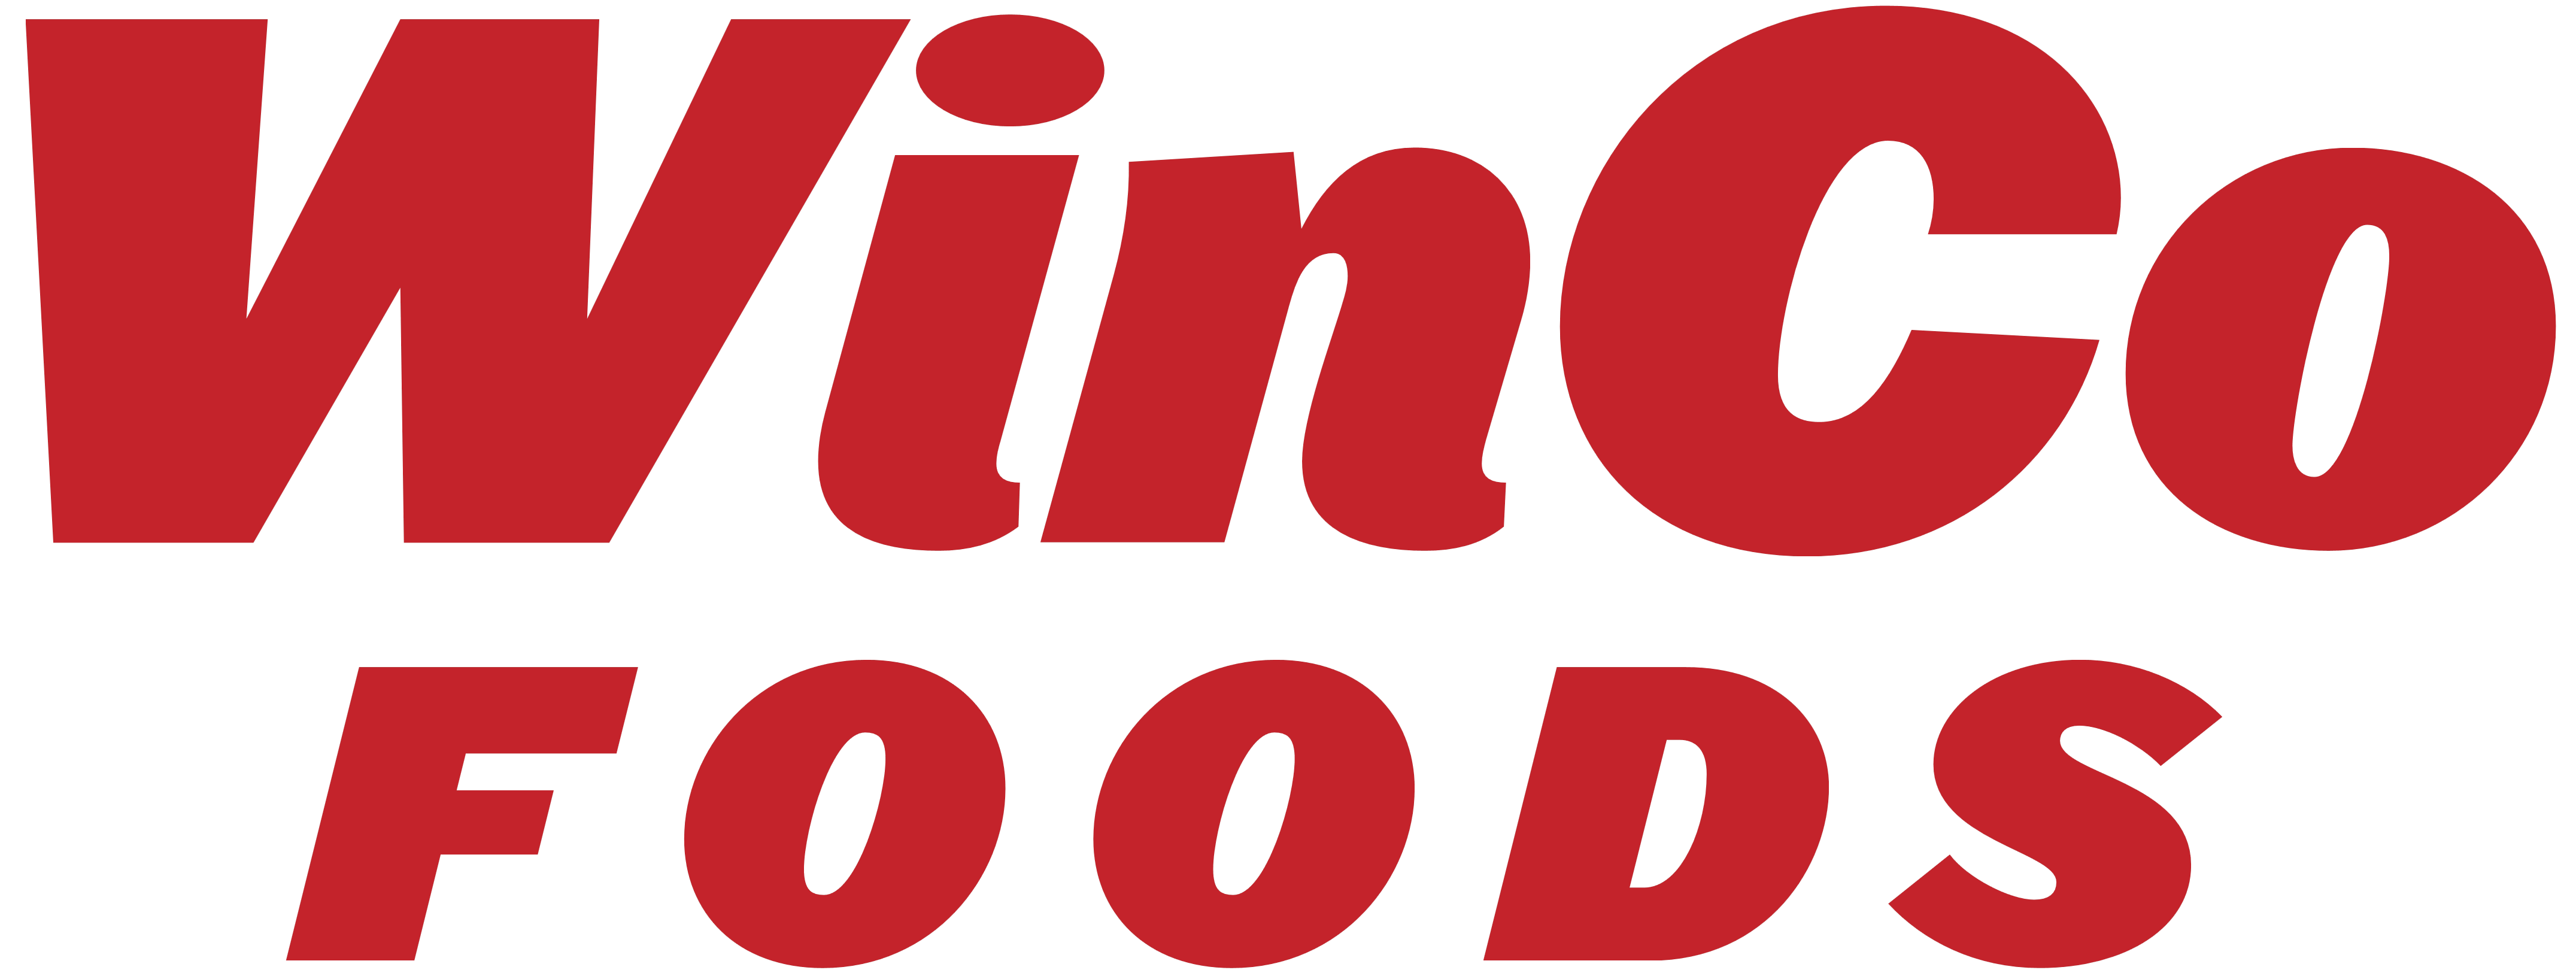 WinCo Foods logo, logotype